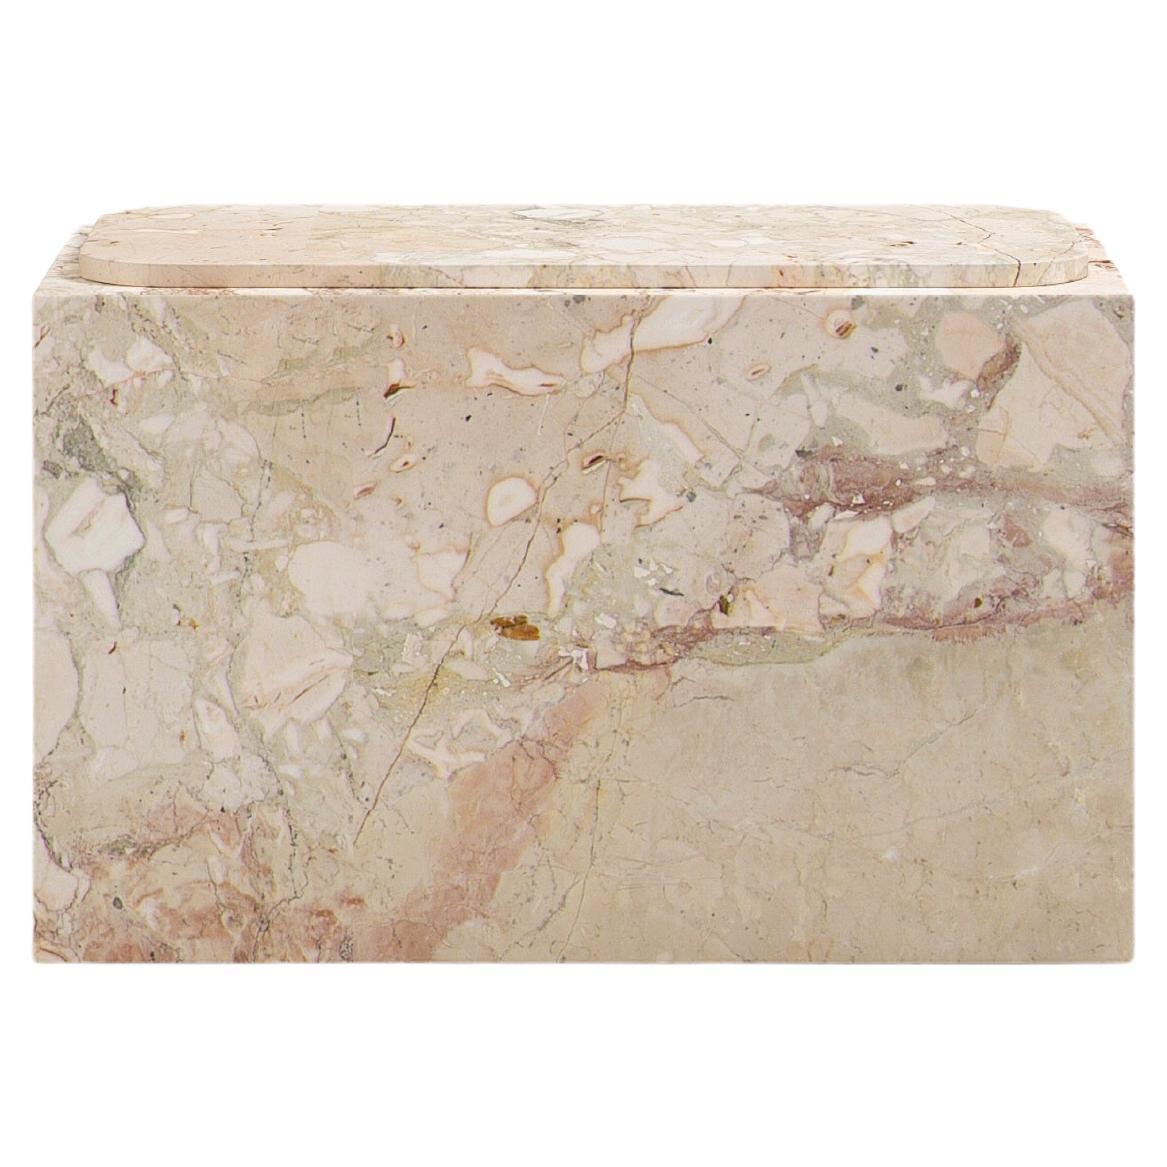 FORM(LA) Cubo Rectangle Side Table 30”L x 16"W x 19”H Breccia Rosa Marble For Sale